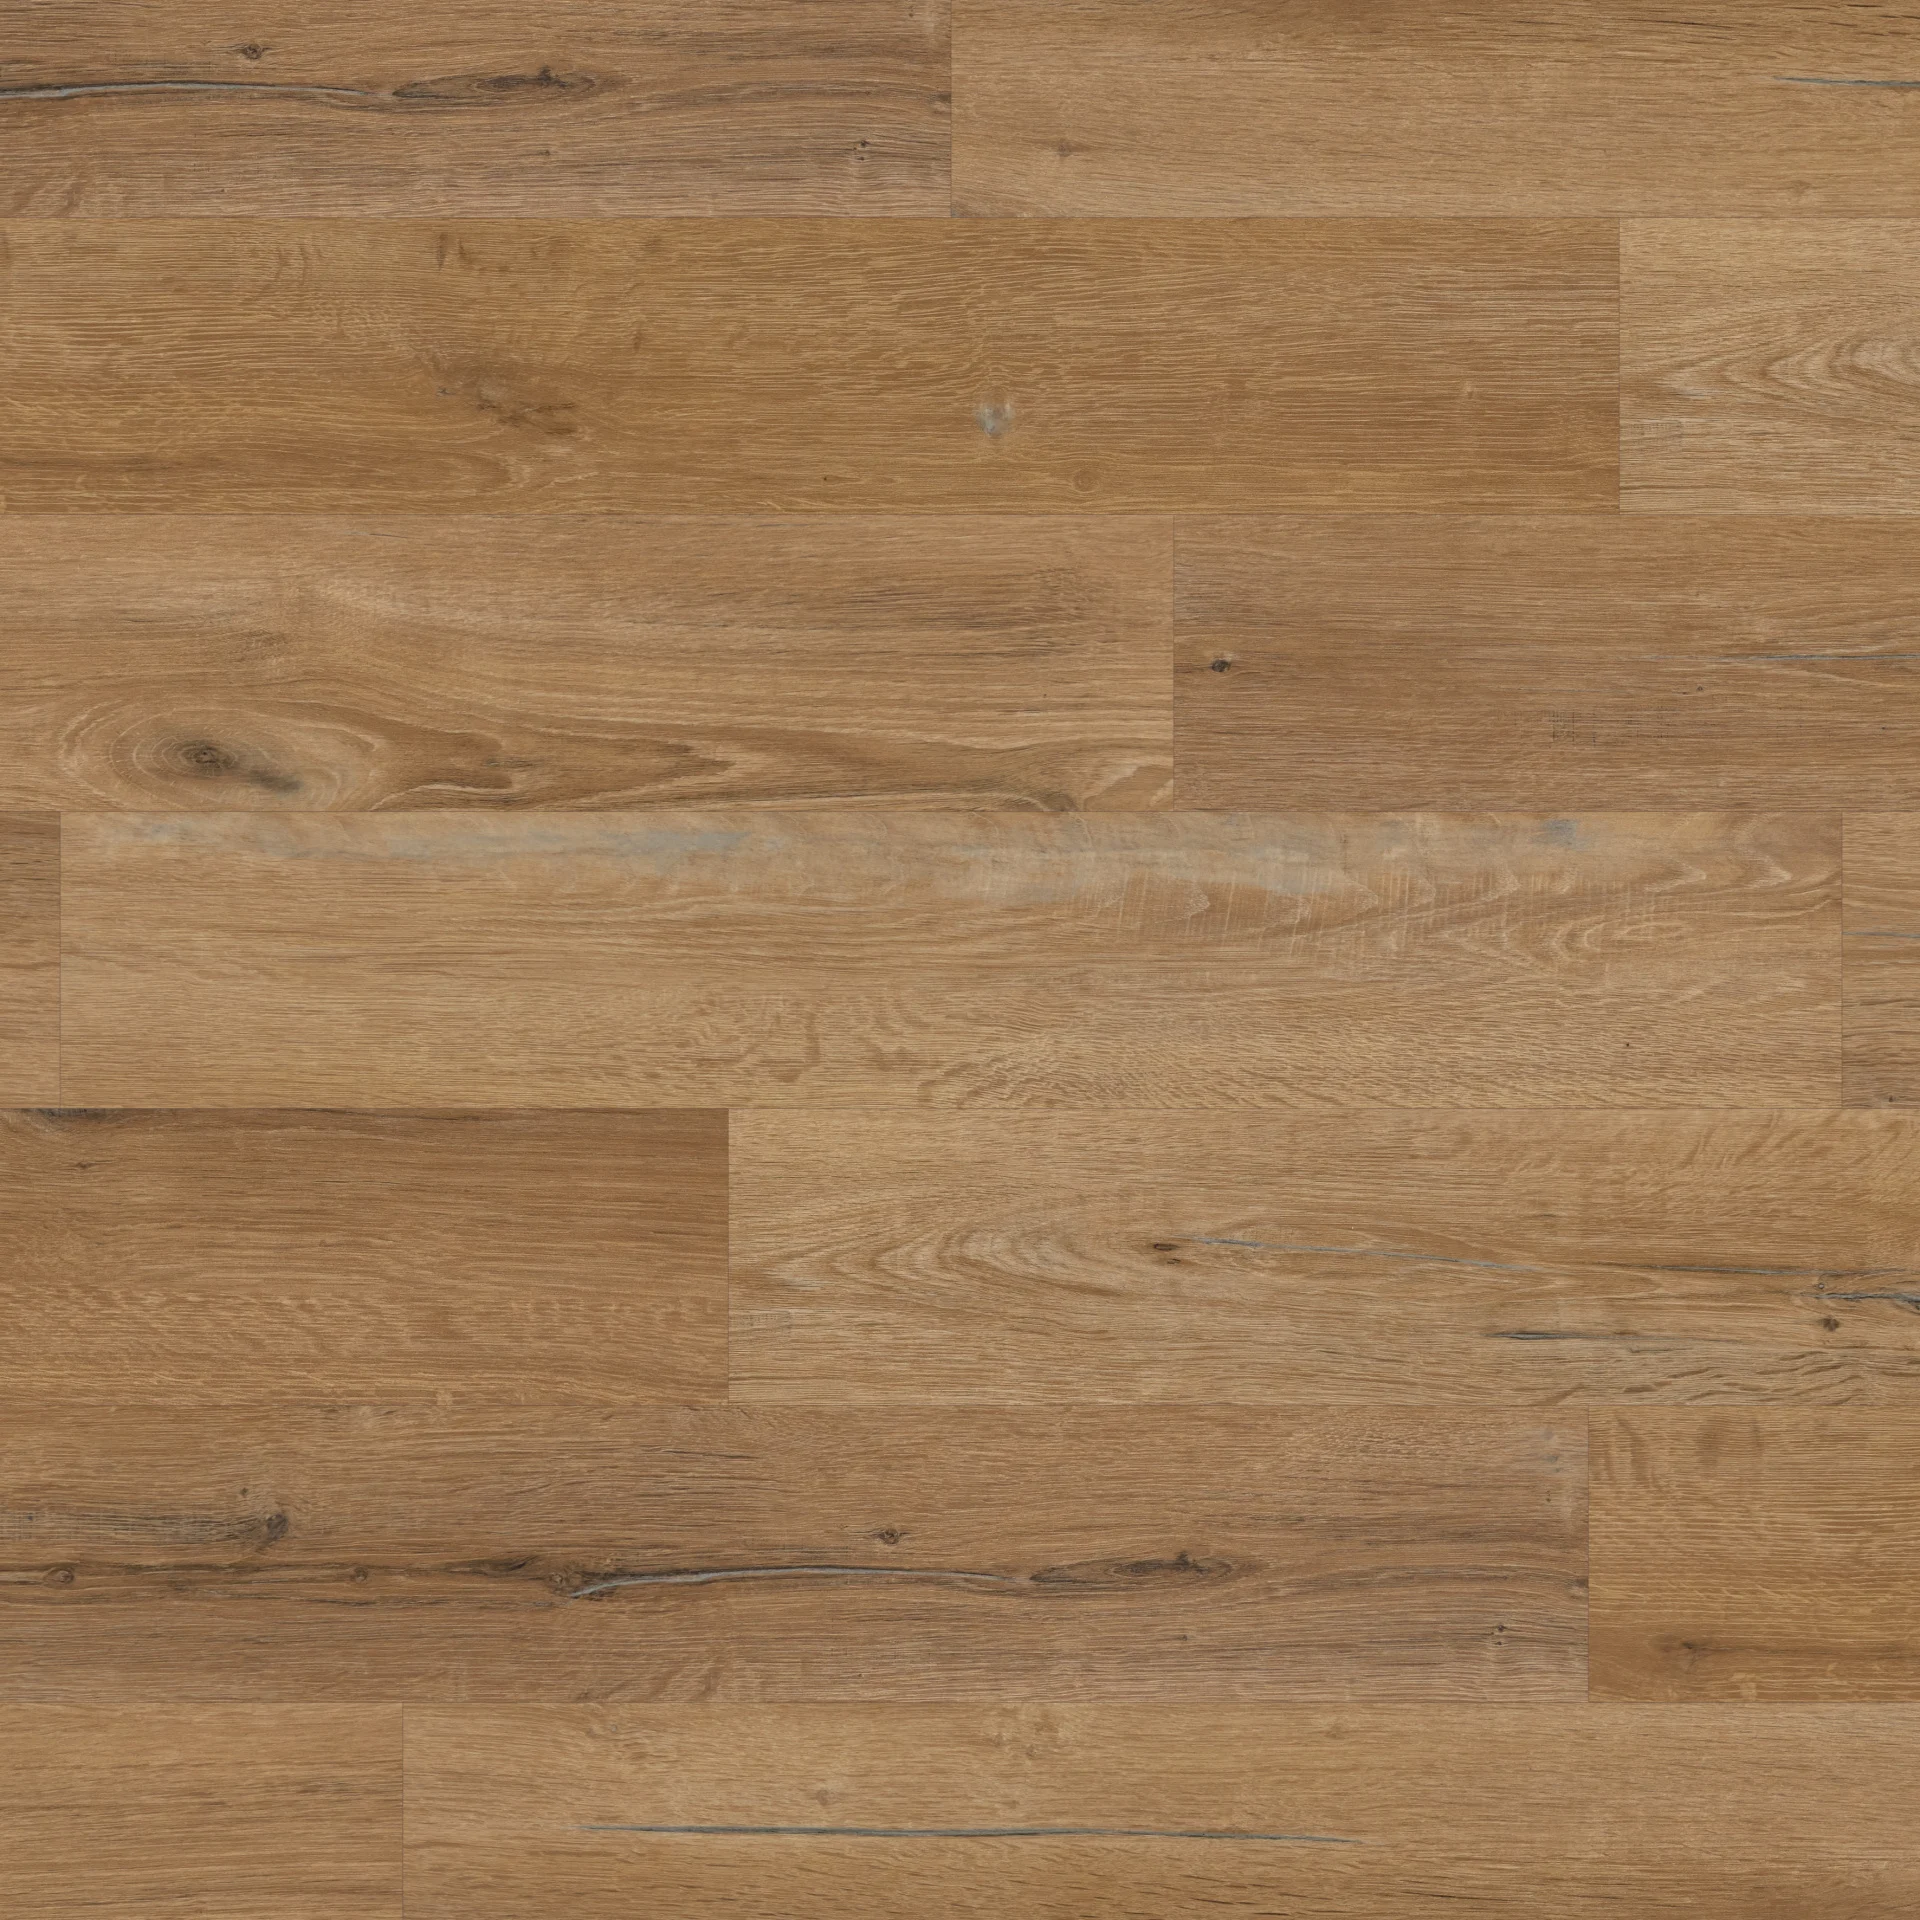 Karndean Knight Tile - Traditional Character Oak KP146 Safety Flooring